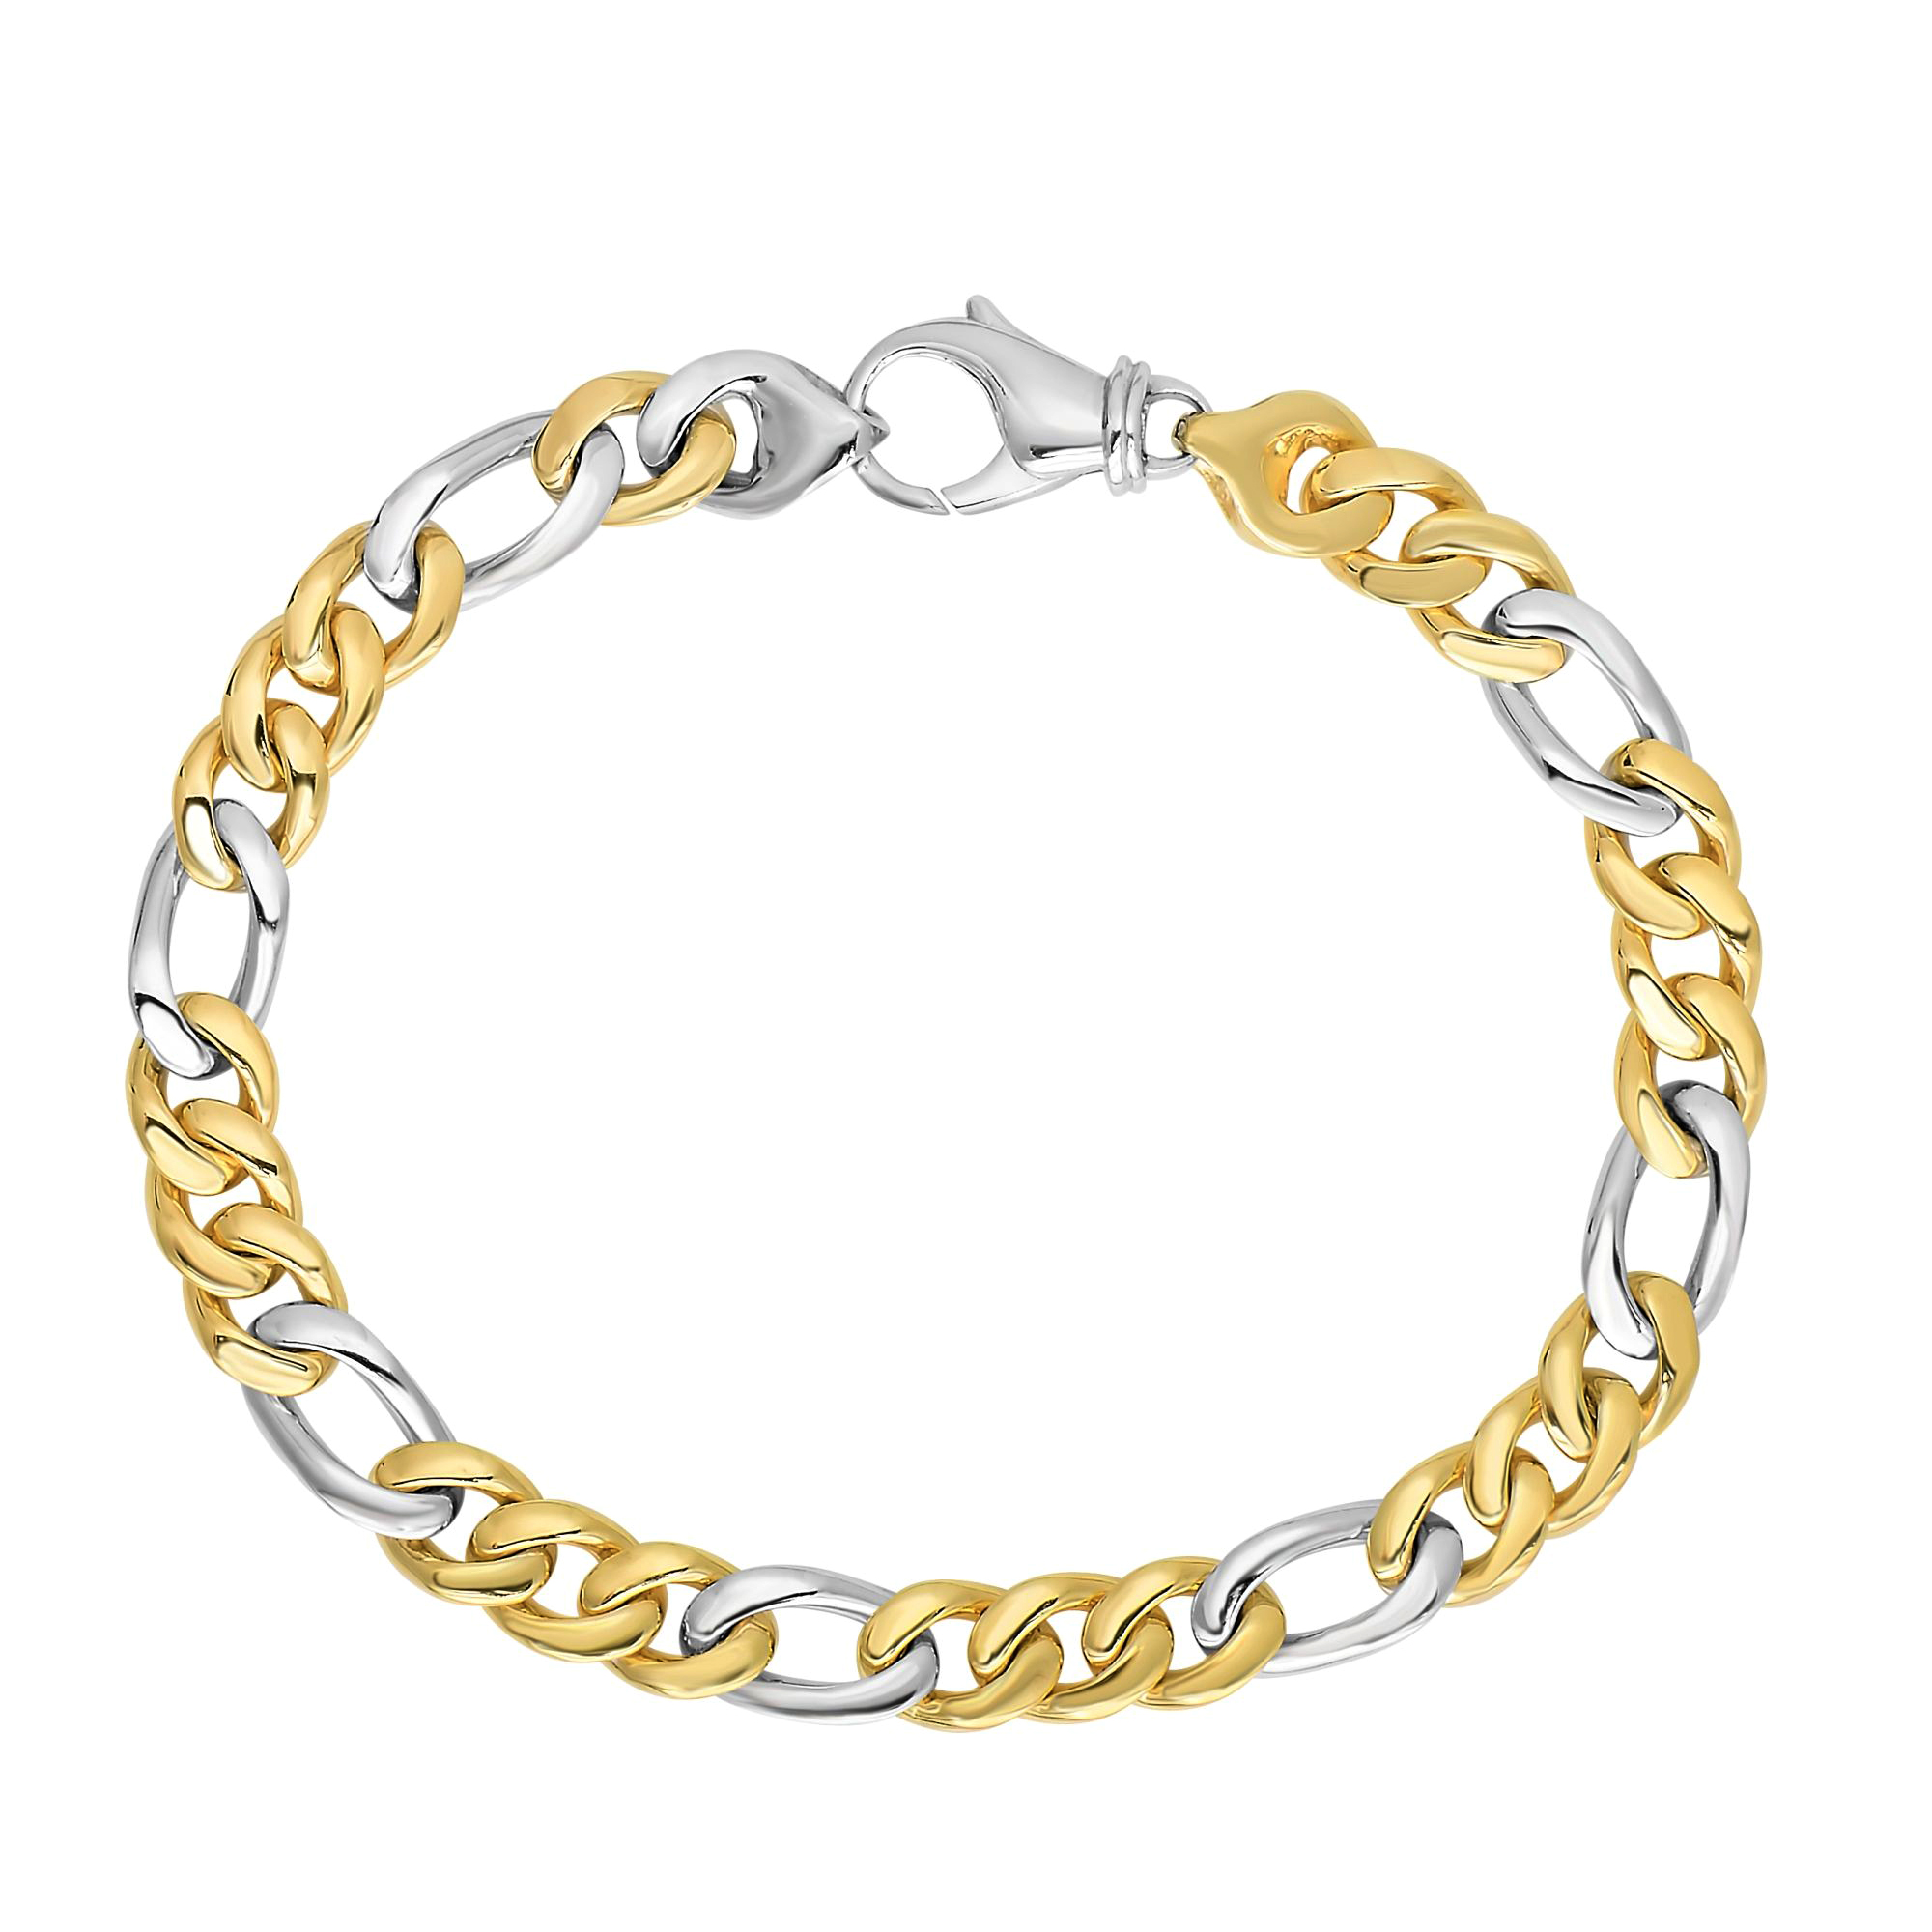 Jewelry Affairs 14k Yellow And White Gold Diamond Cut Figaro Link Mens Bracelet, 8.5"